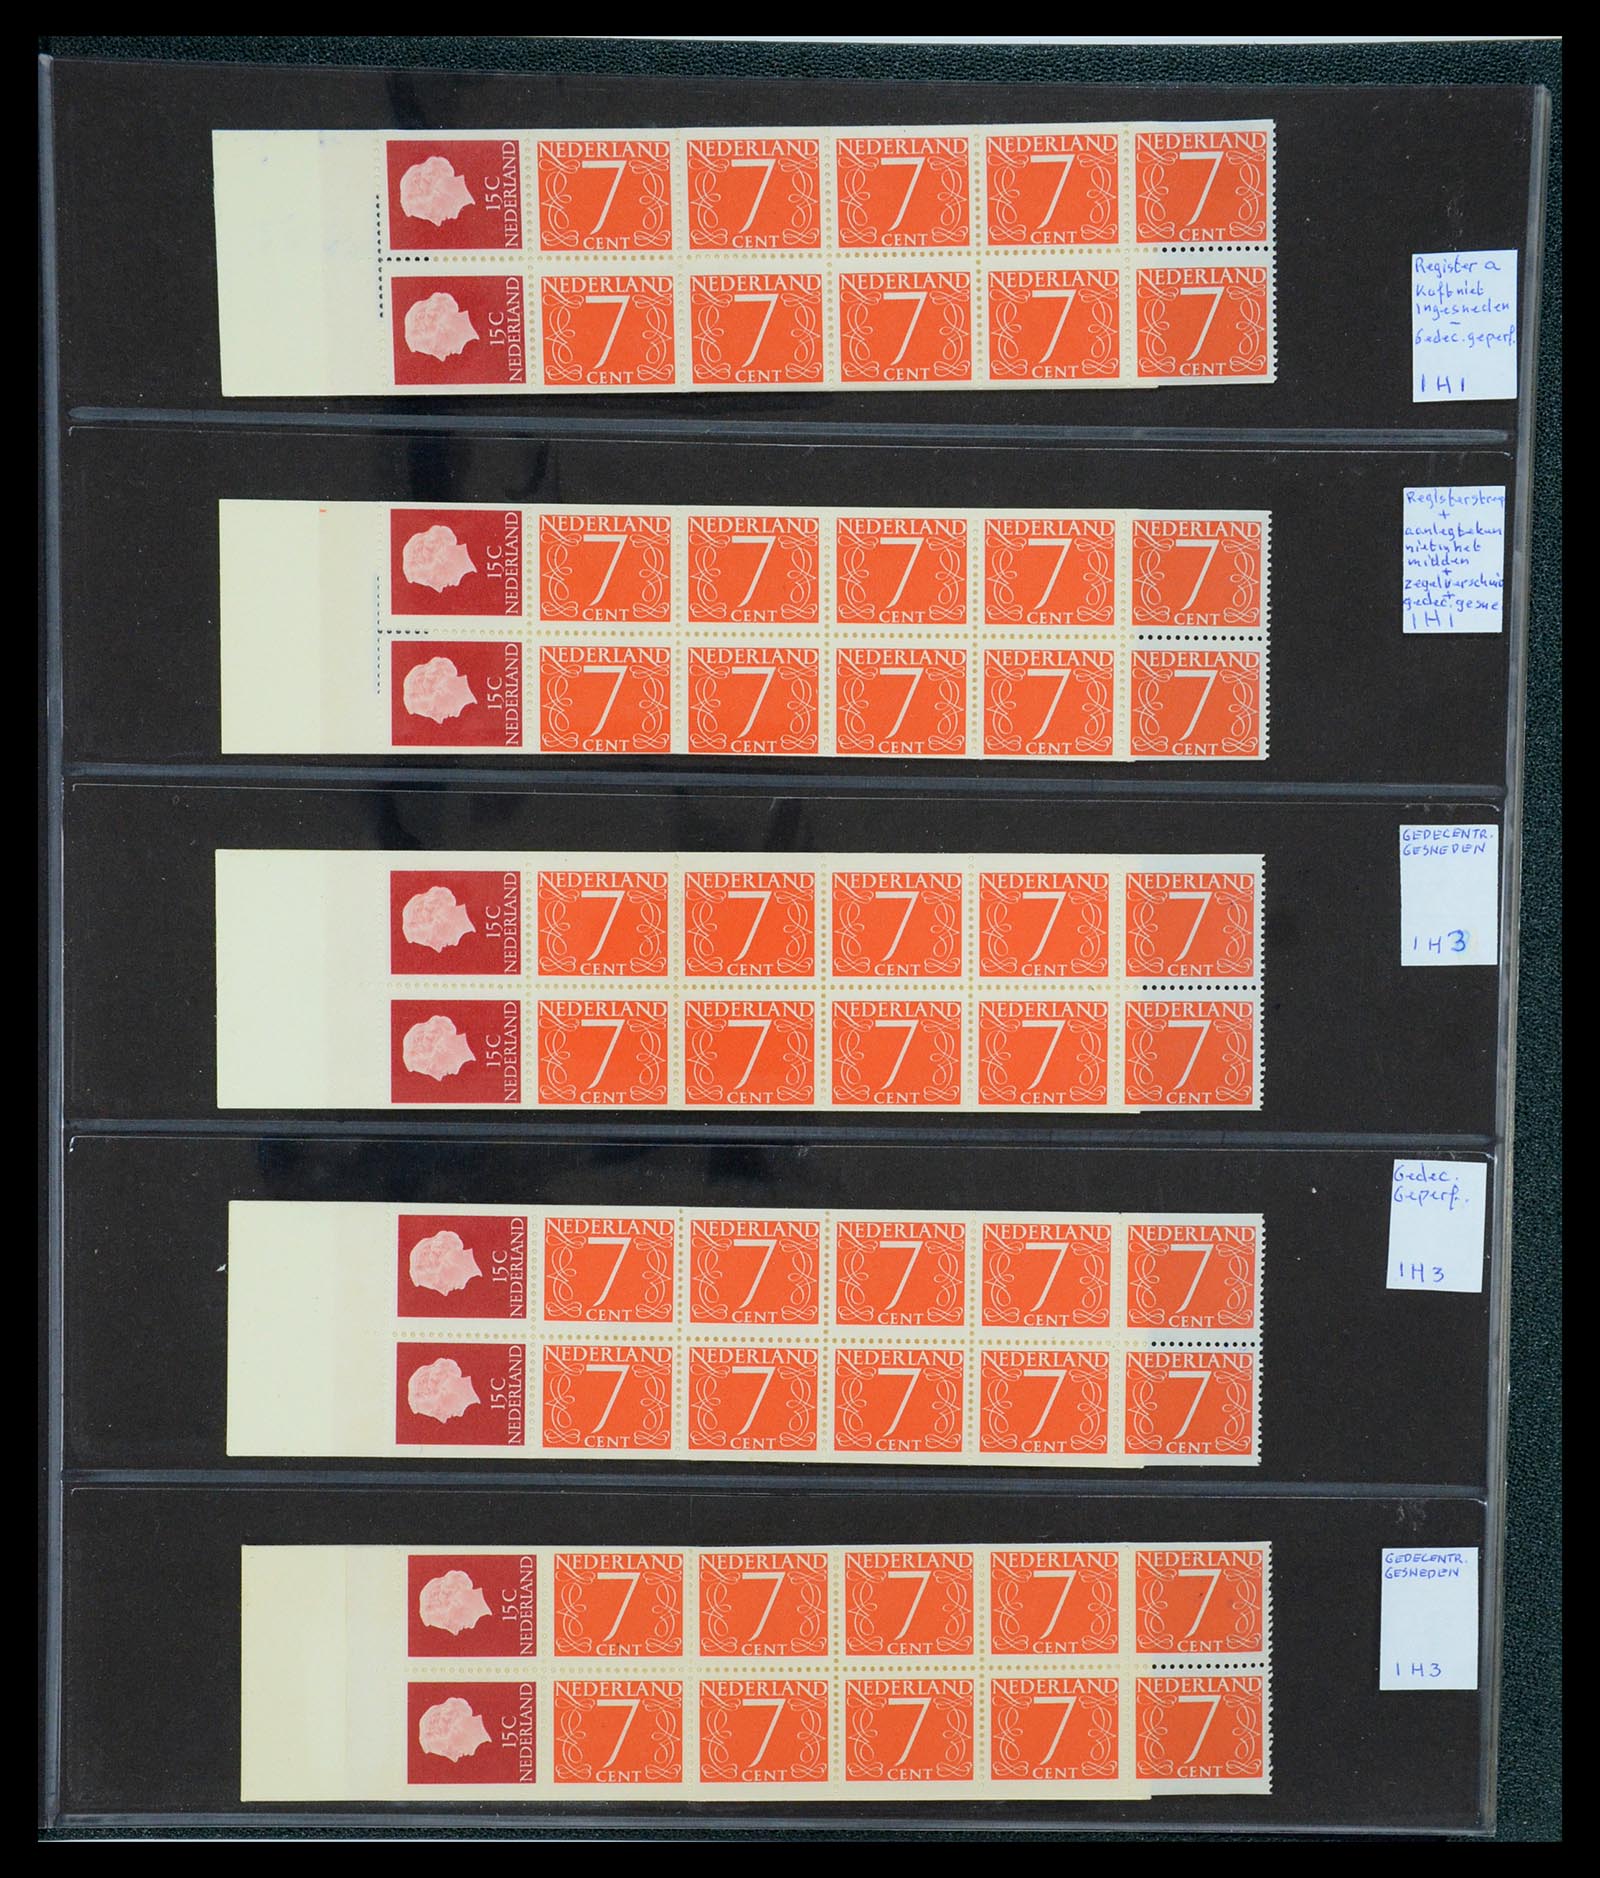 35705 004 - Stamp Collection 35705 Netherlands stamp booklets 1964-2000.